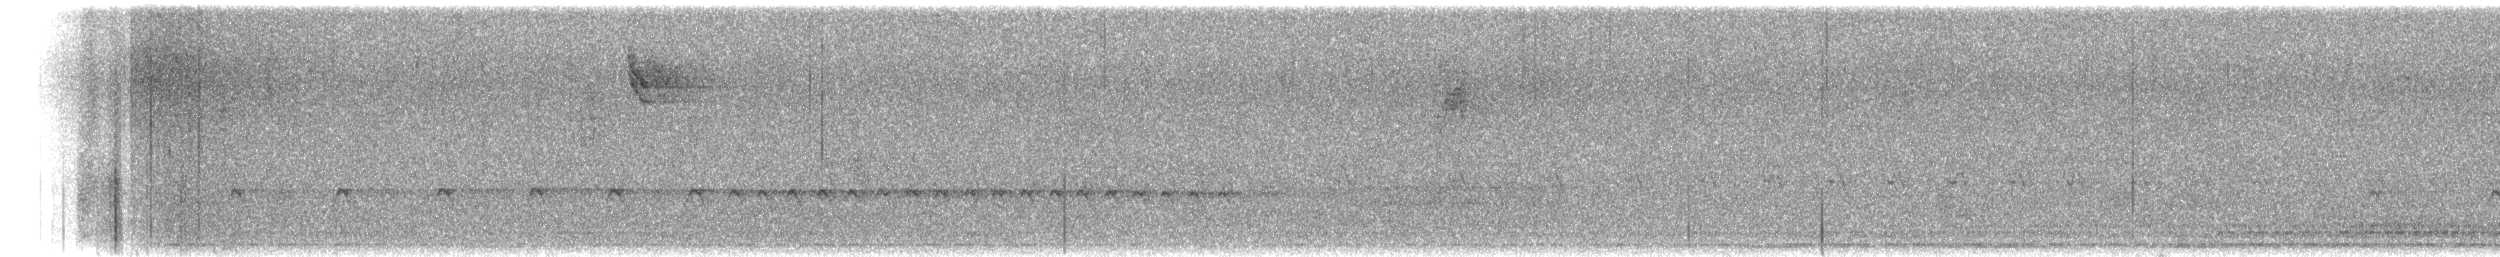 Chaparralgrasmücke - ML501595001